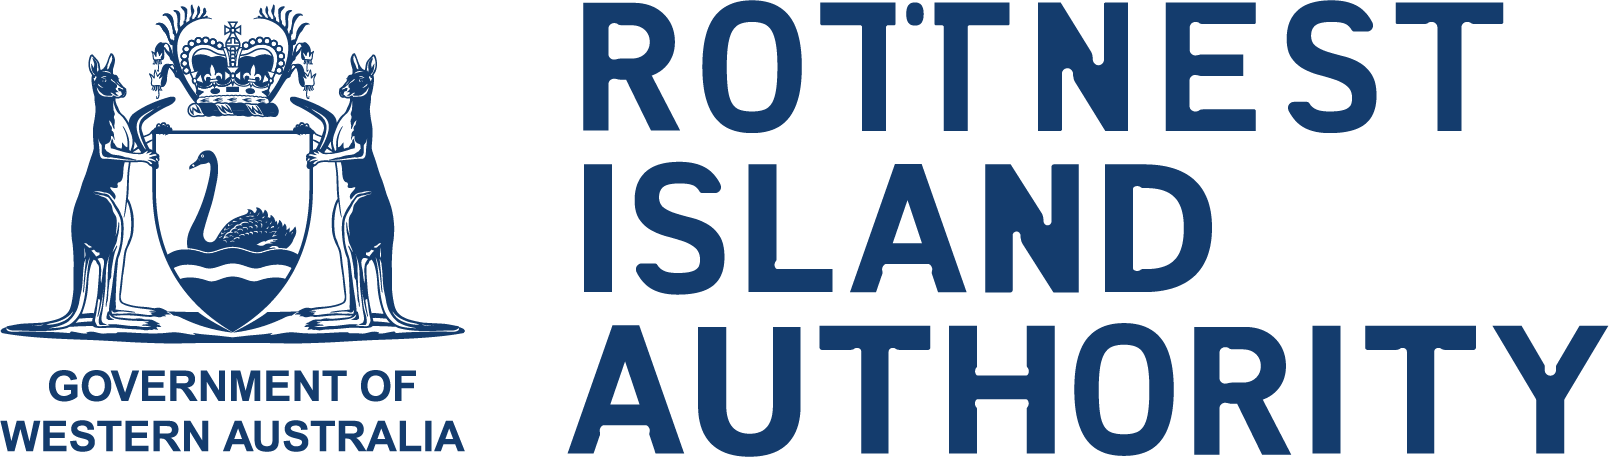 Rottnest Island Authority  logo